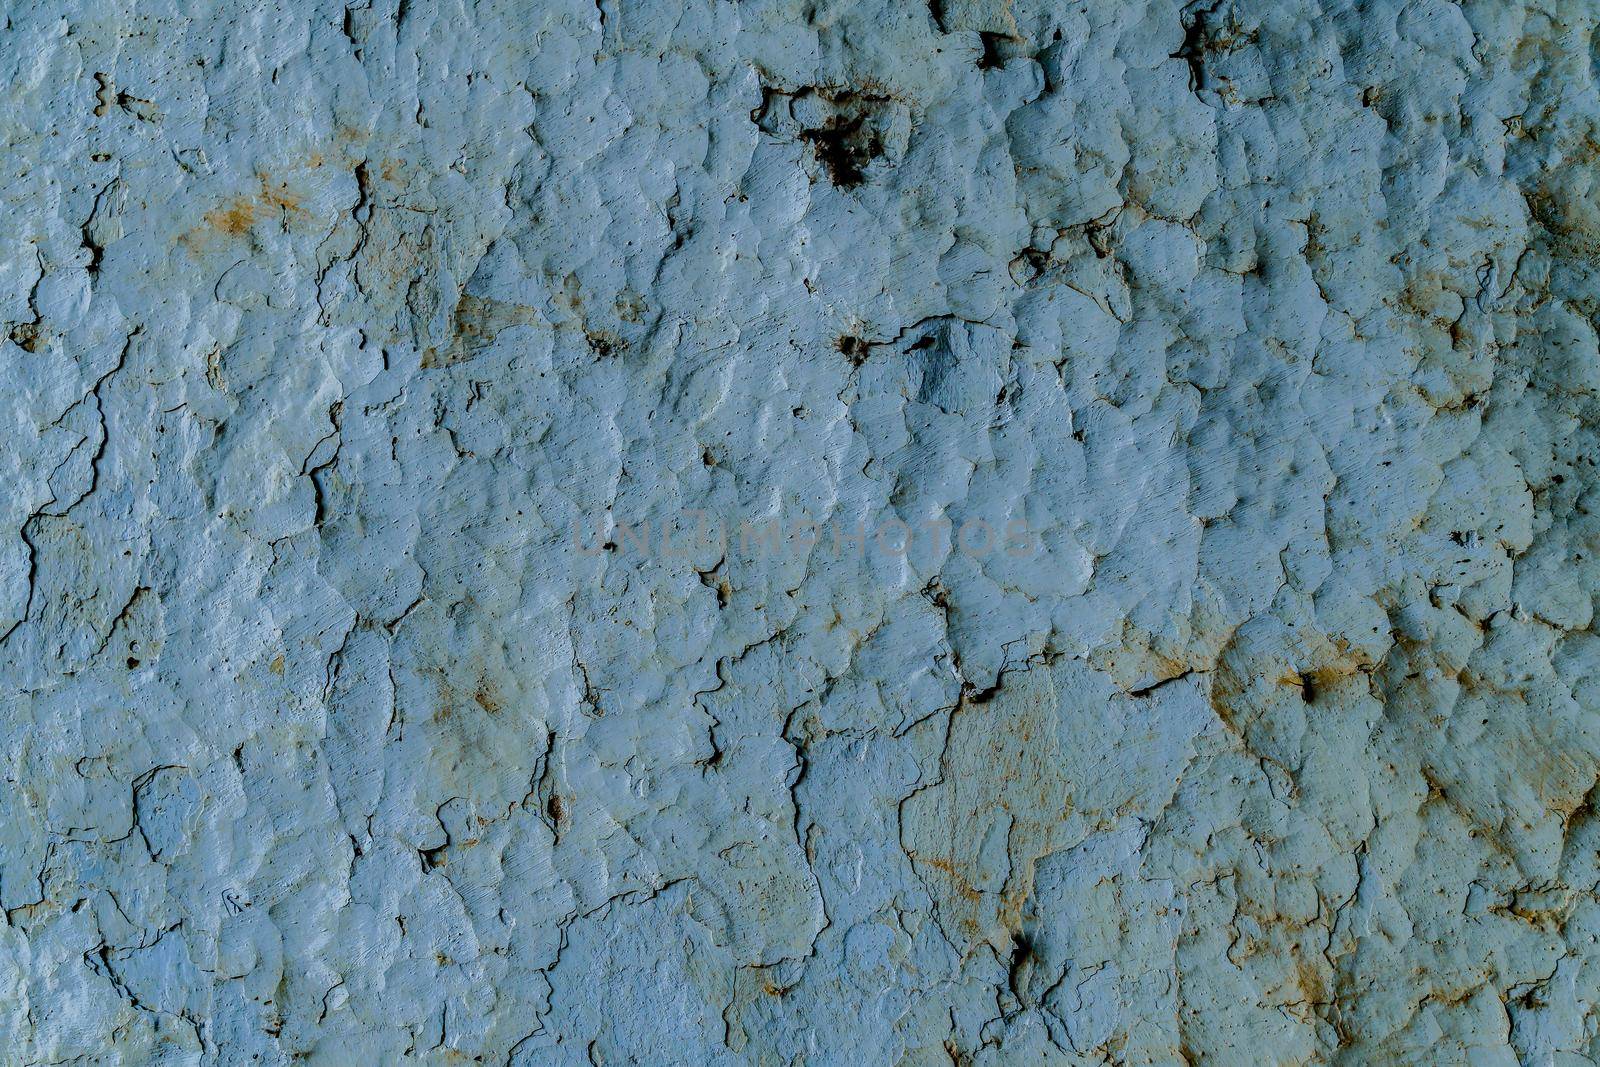 textured background of a peeling wall by joseantona